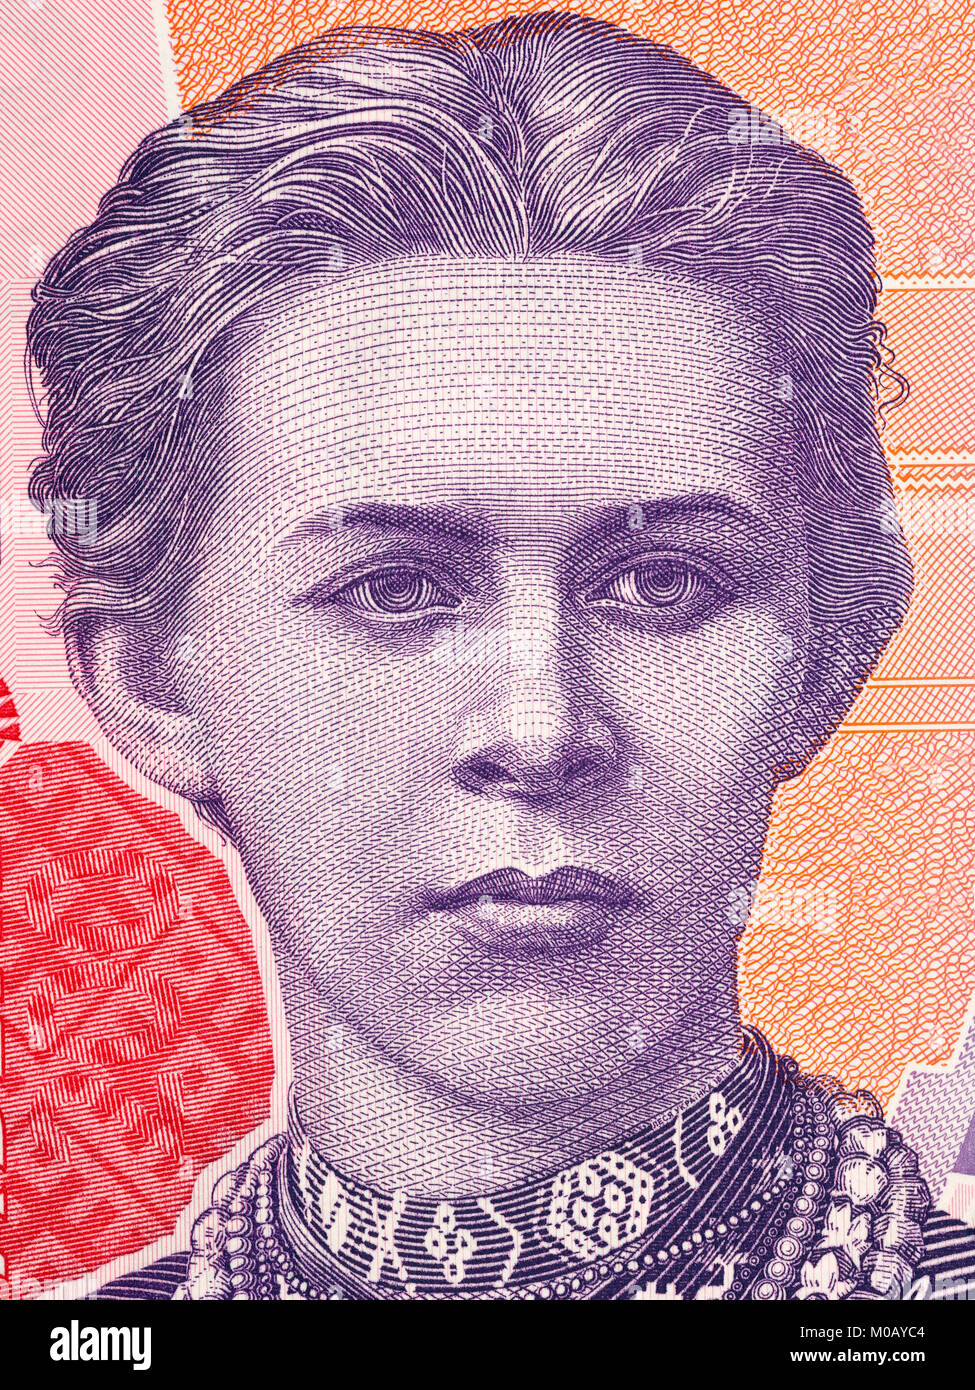 Lesya Ukrainka portrait from Ukrainian money Stock Photo